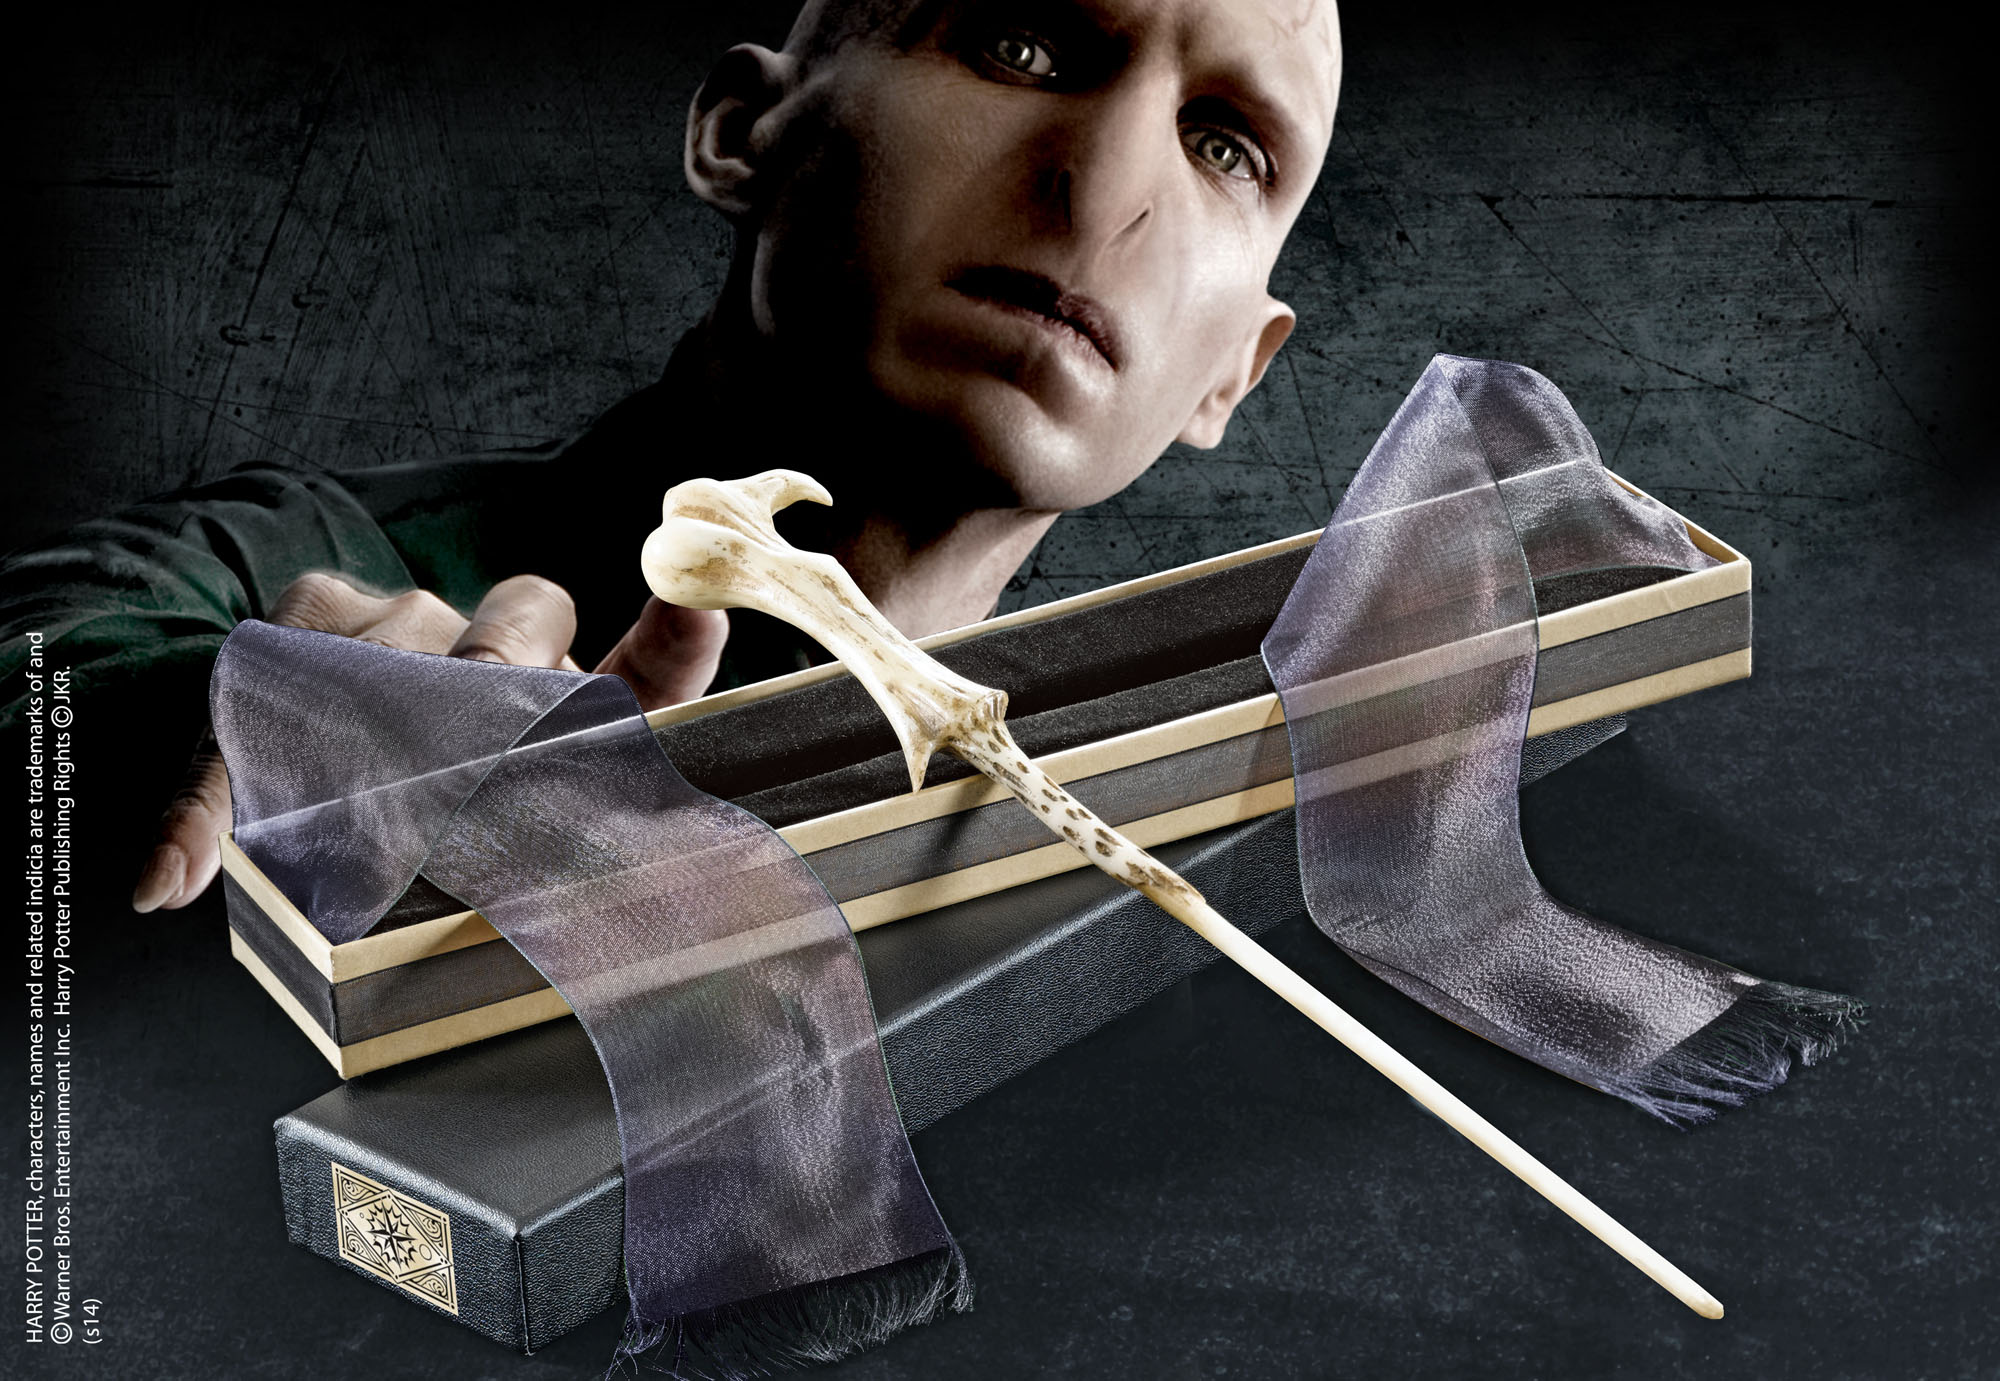 Bacchetta (Wand) di Tom Orvoloson Riddle o Tom Marvolo Riddle (Lord Voldemort)